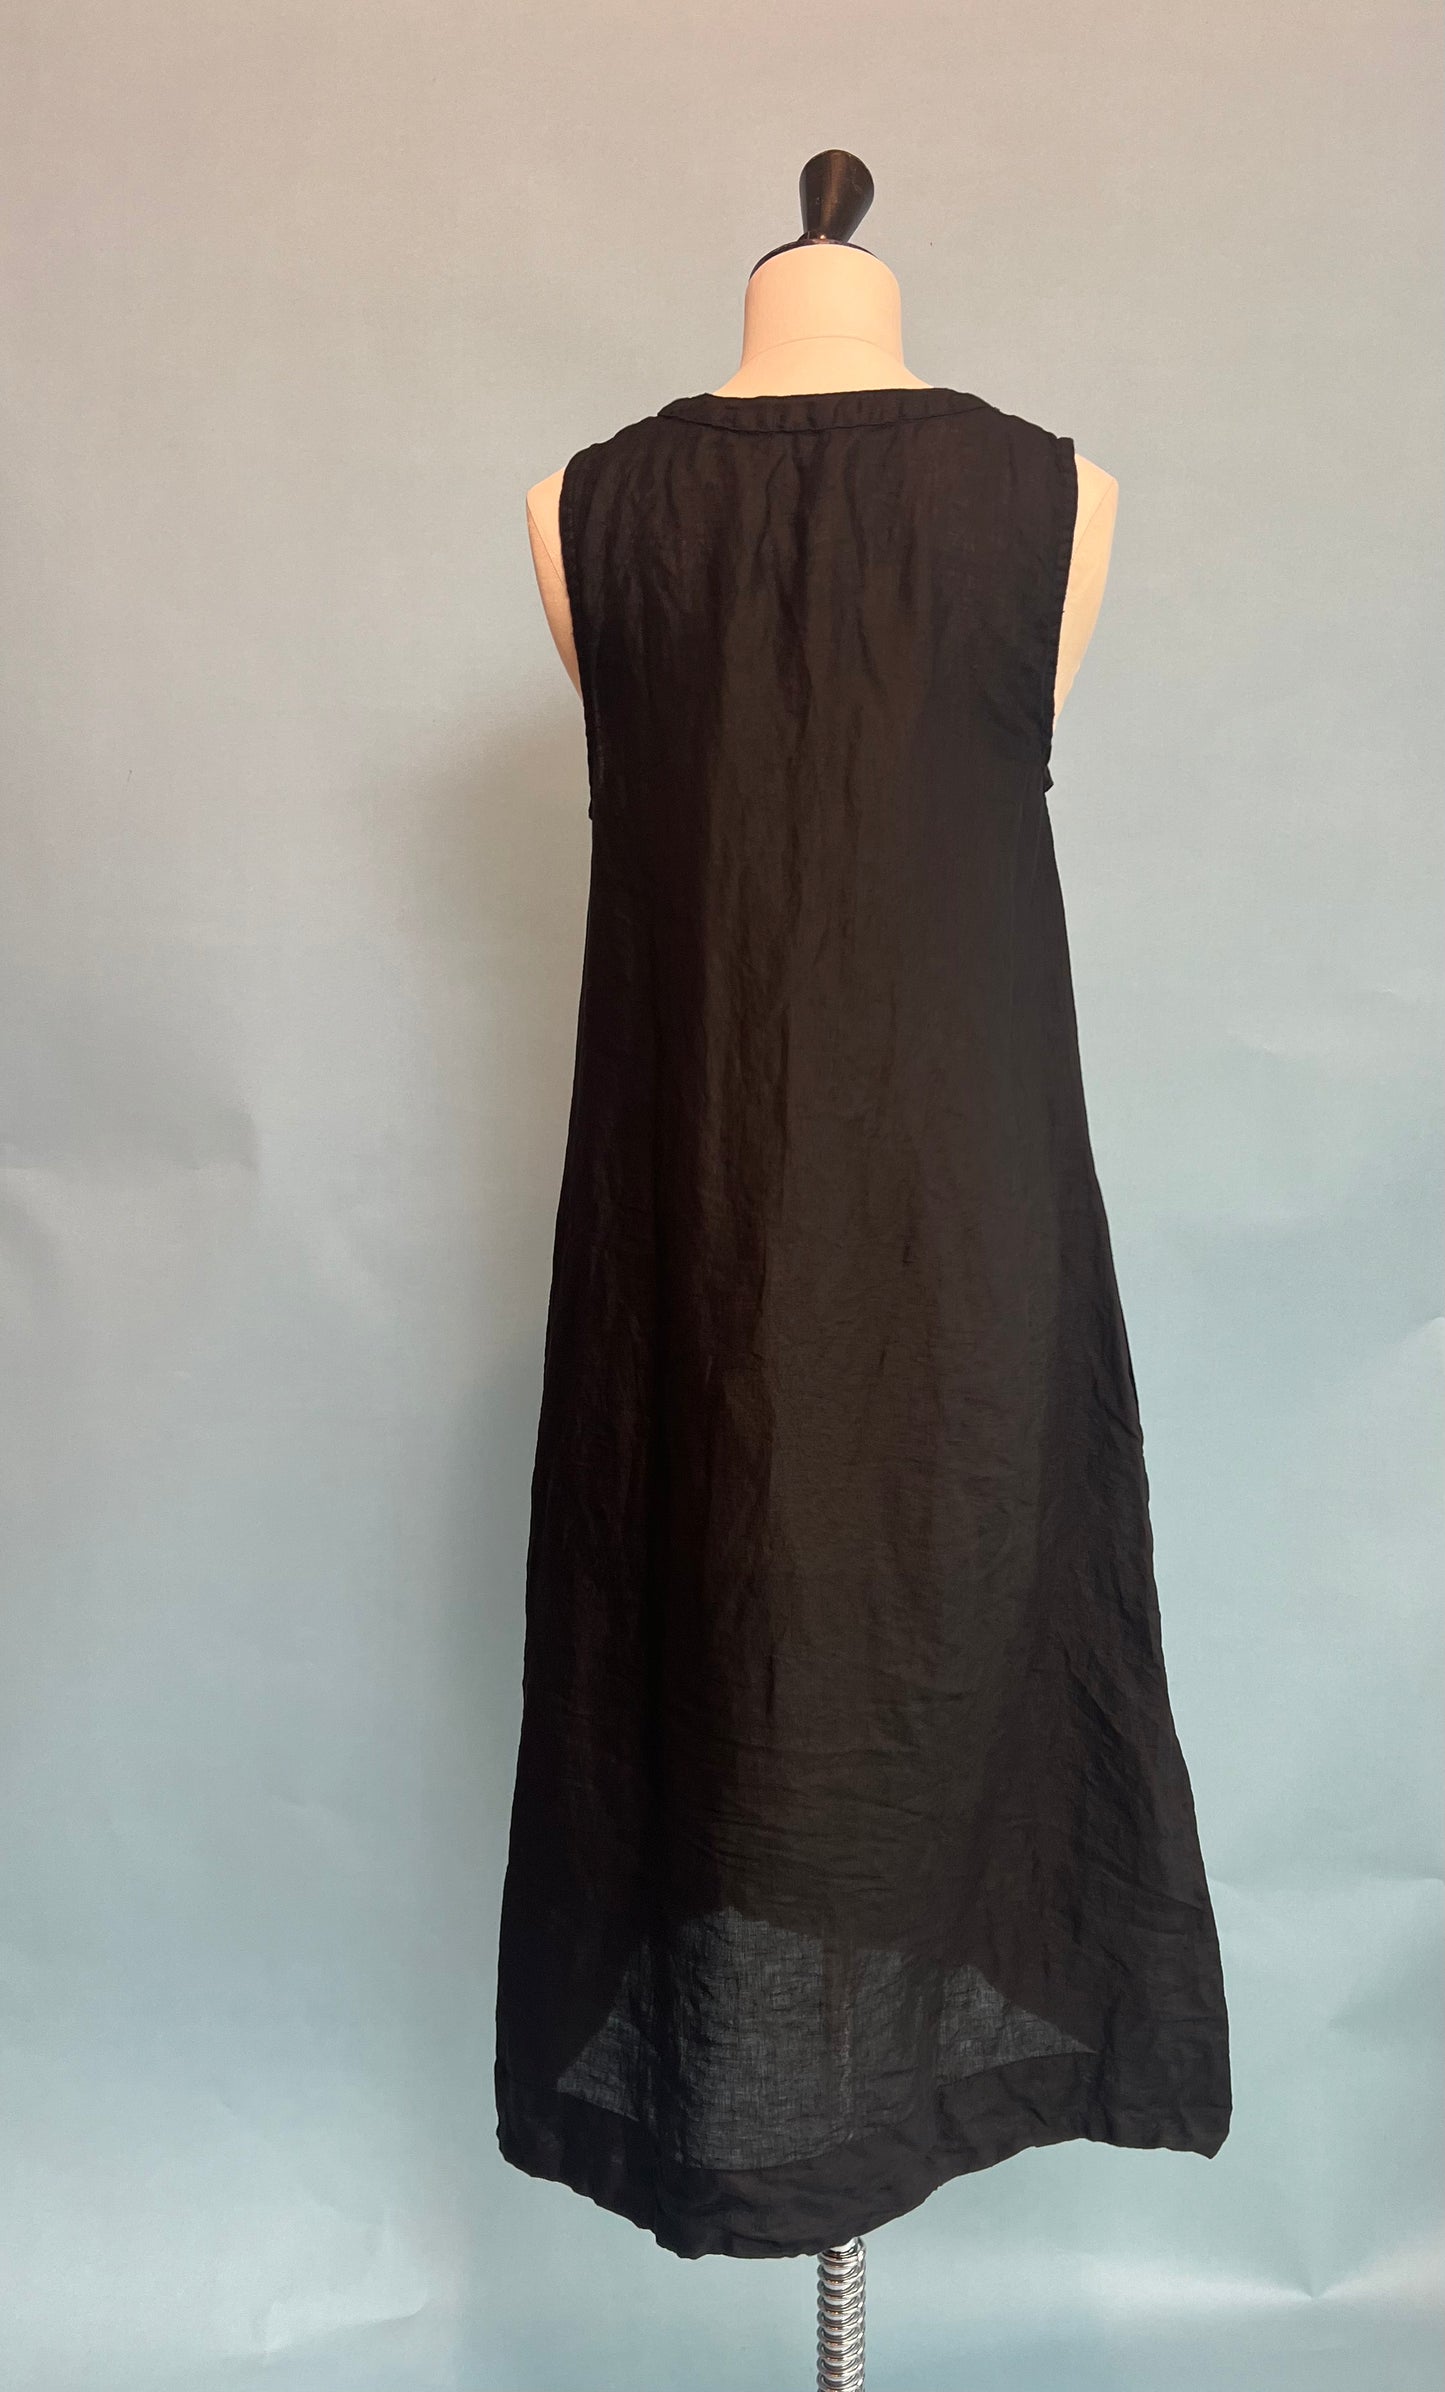 CP Shades Tasha Dress in Black or Dragonfruit